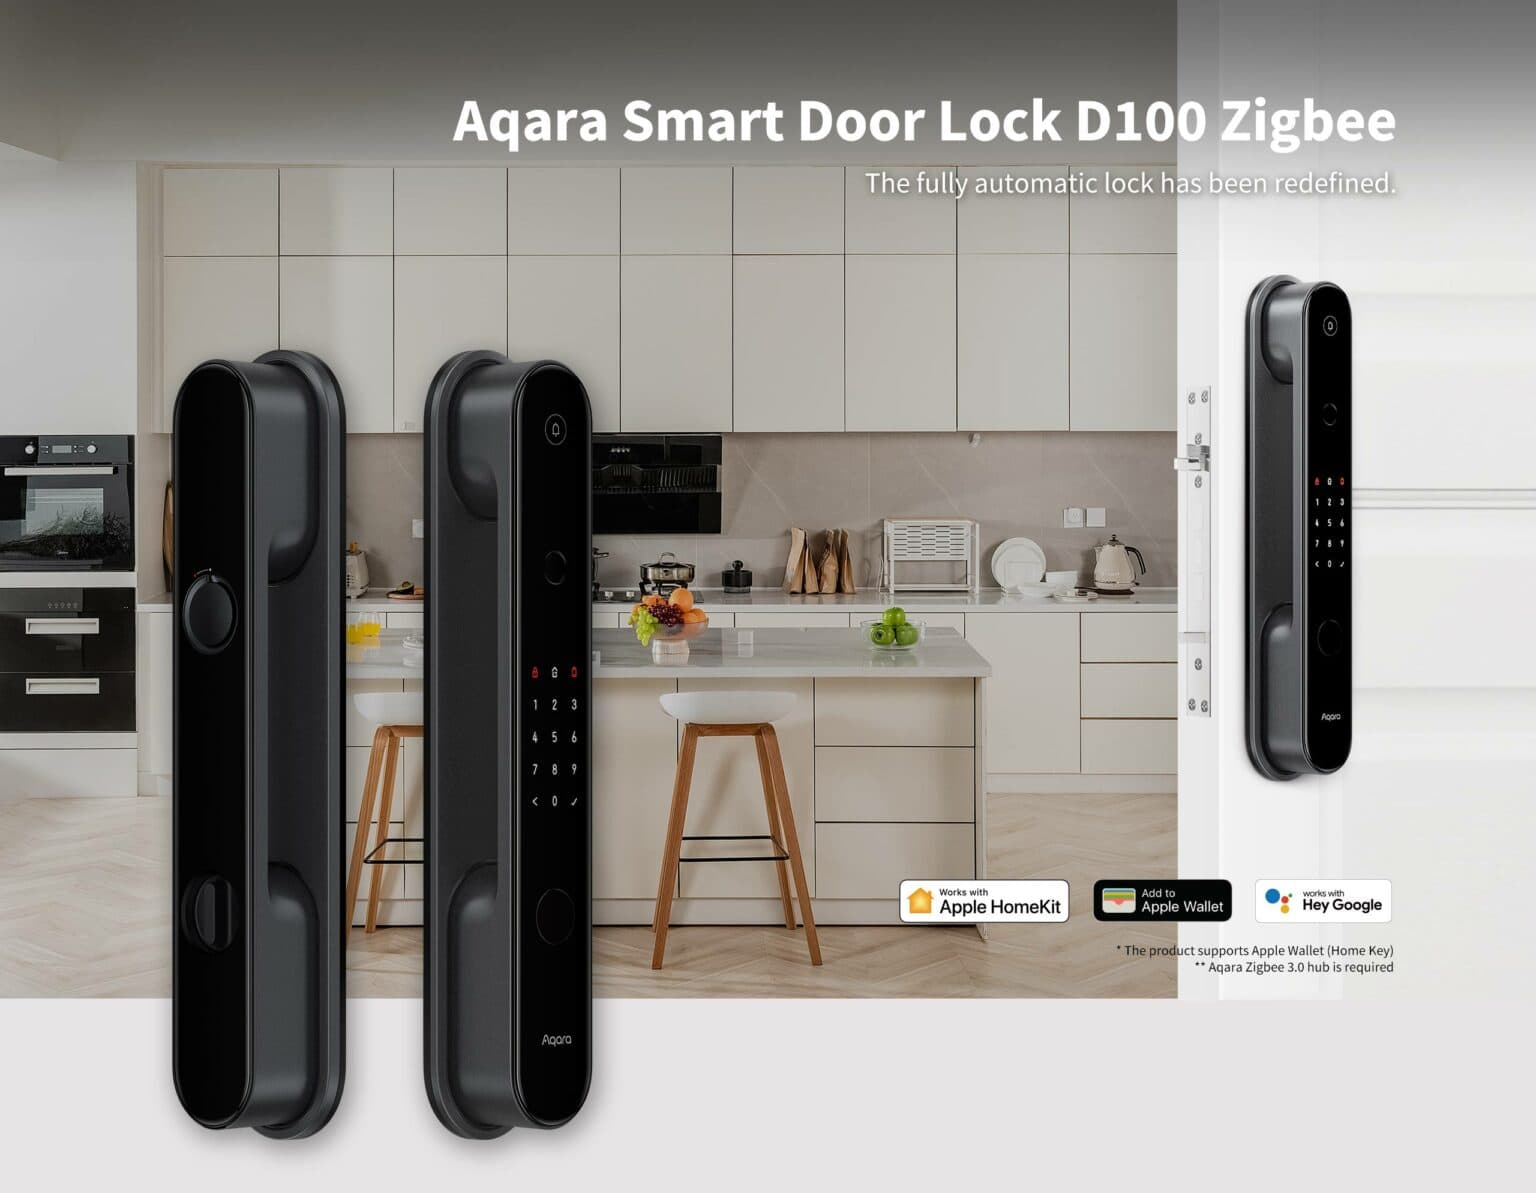 The Aqara Smart Door Lock D100 Zigbee works with HomeKit and Home Key.